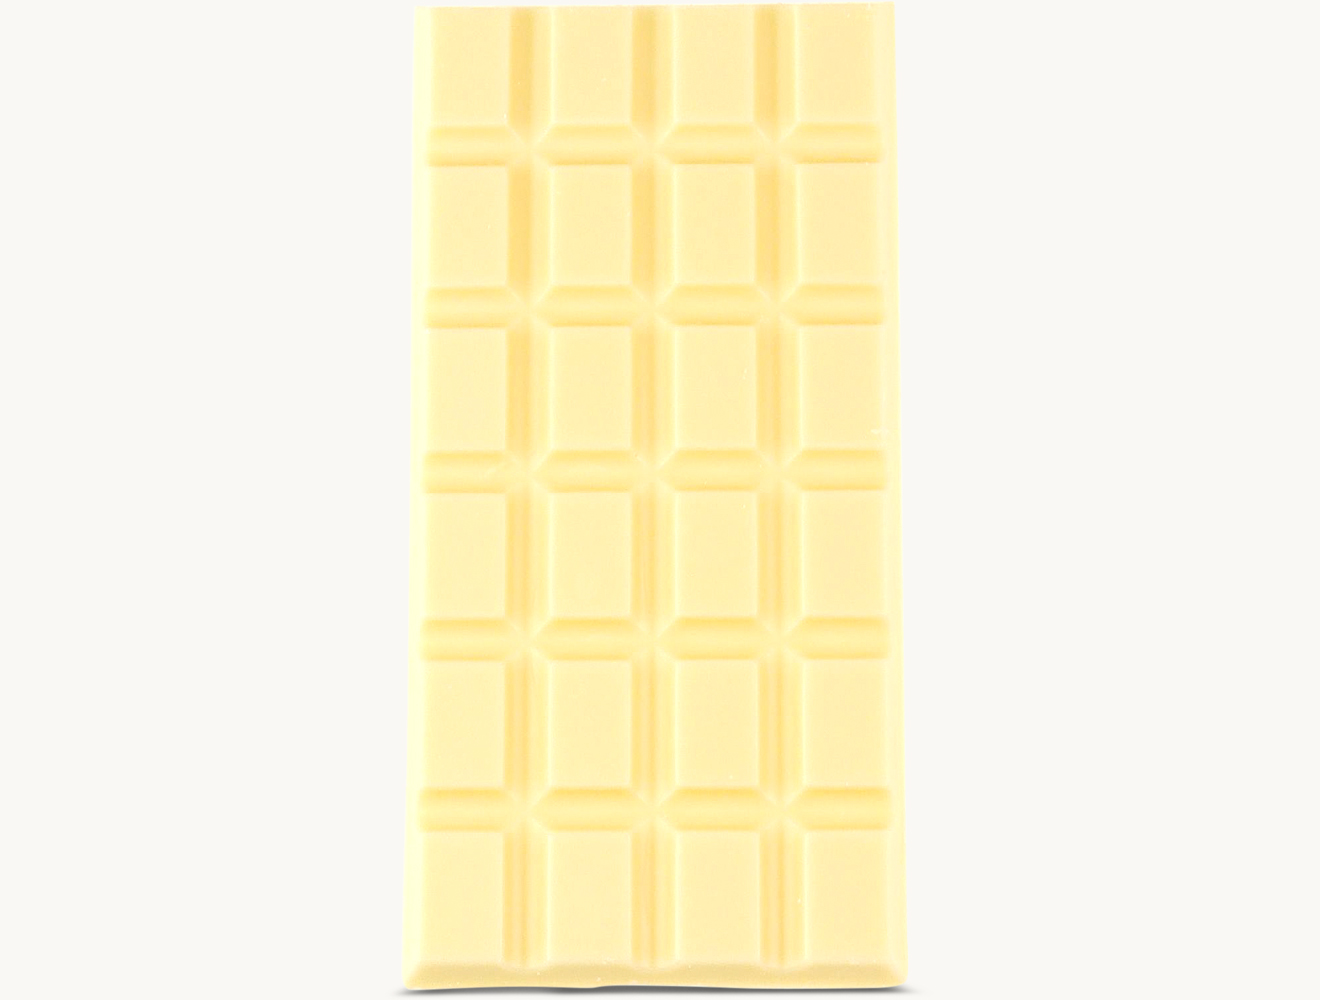 Tafelschokolade Weiße Schokolade